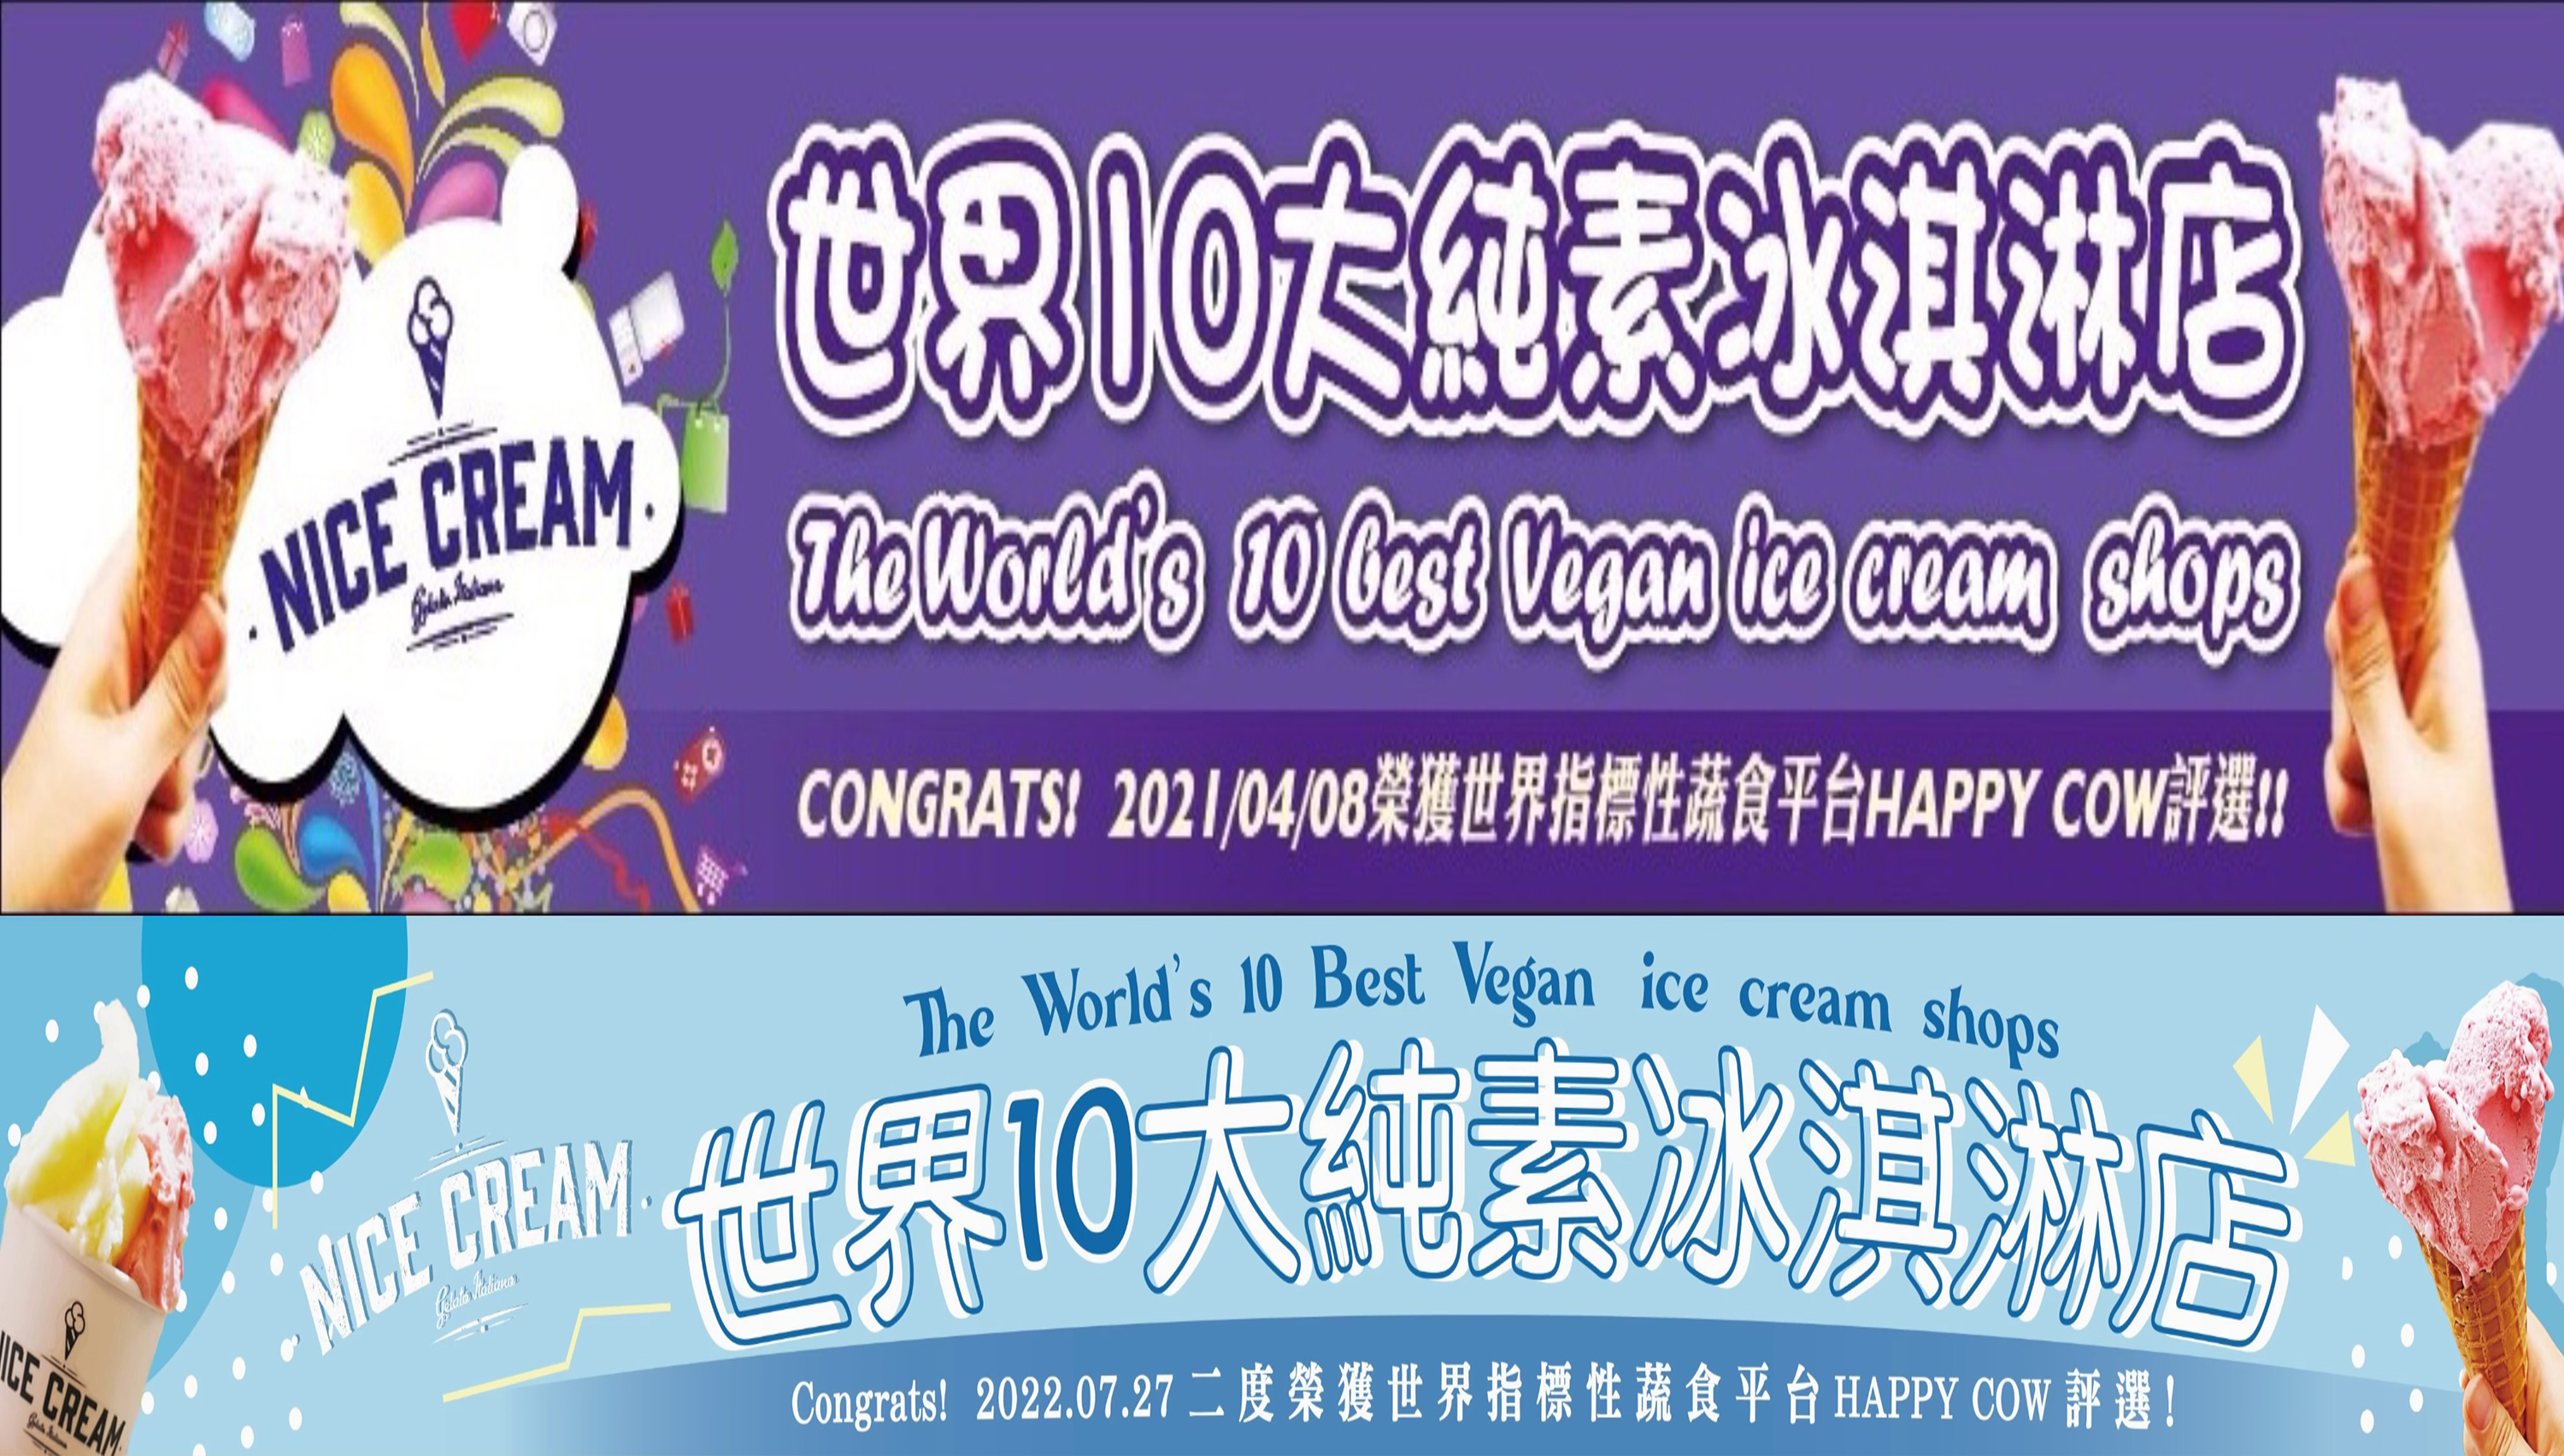 2021/2022 The World’s 10 best Vegan ice cream shops | NICE CREAM